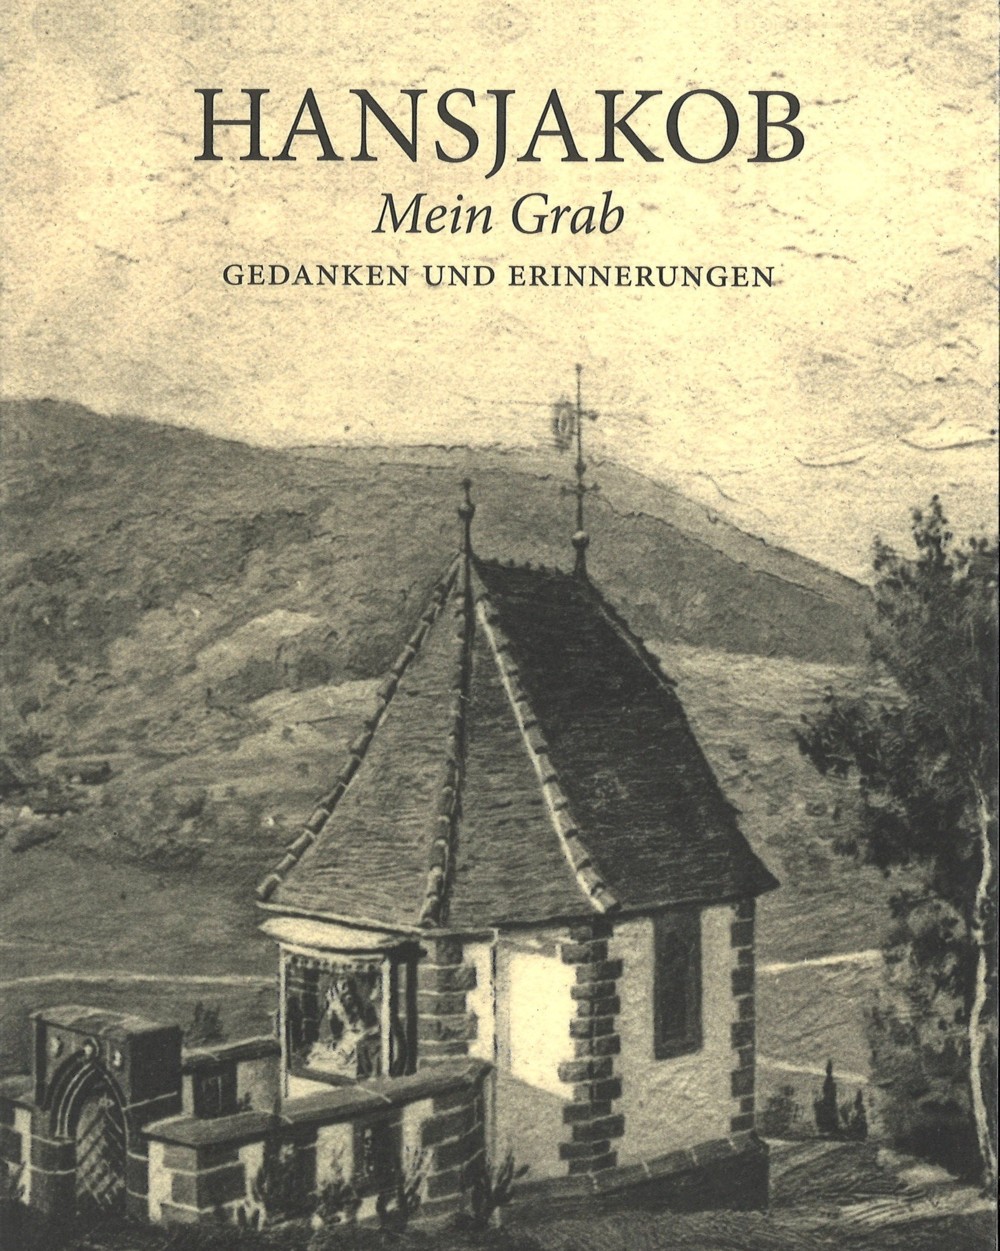 Buchtitel: Hansjakob - Mein Grab